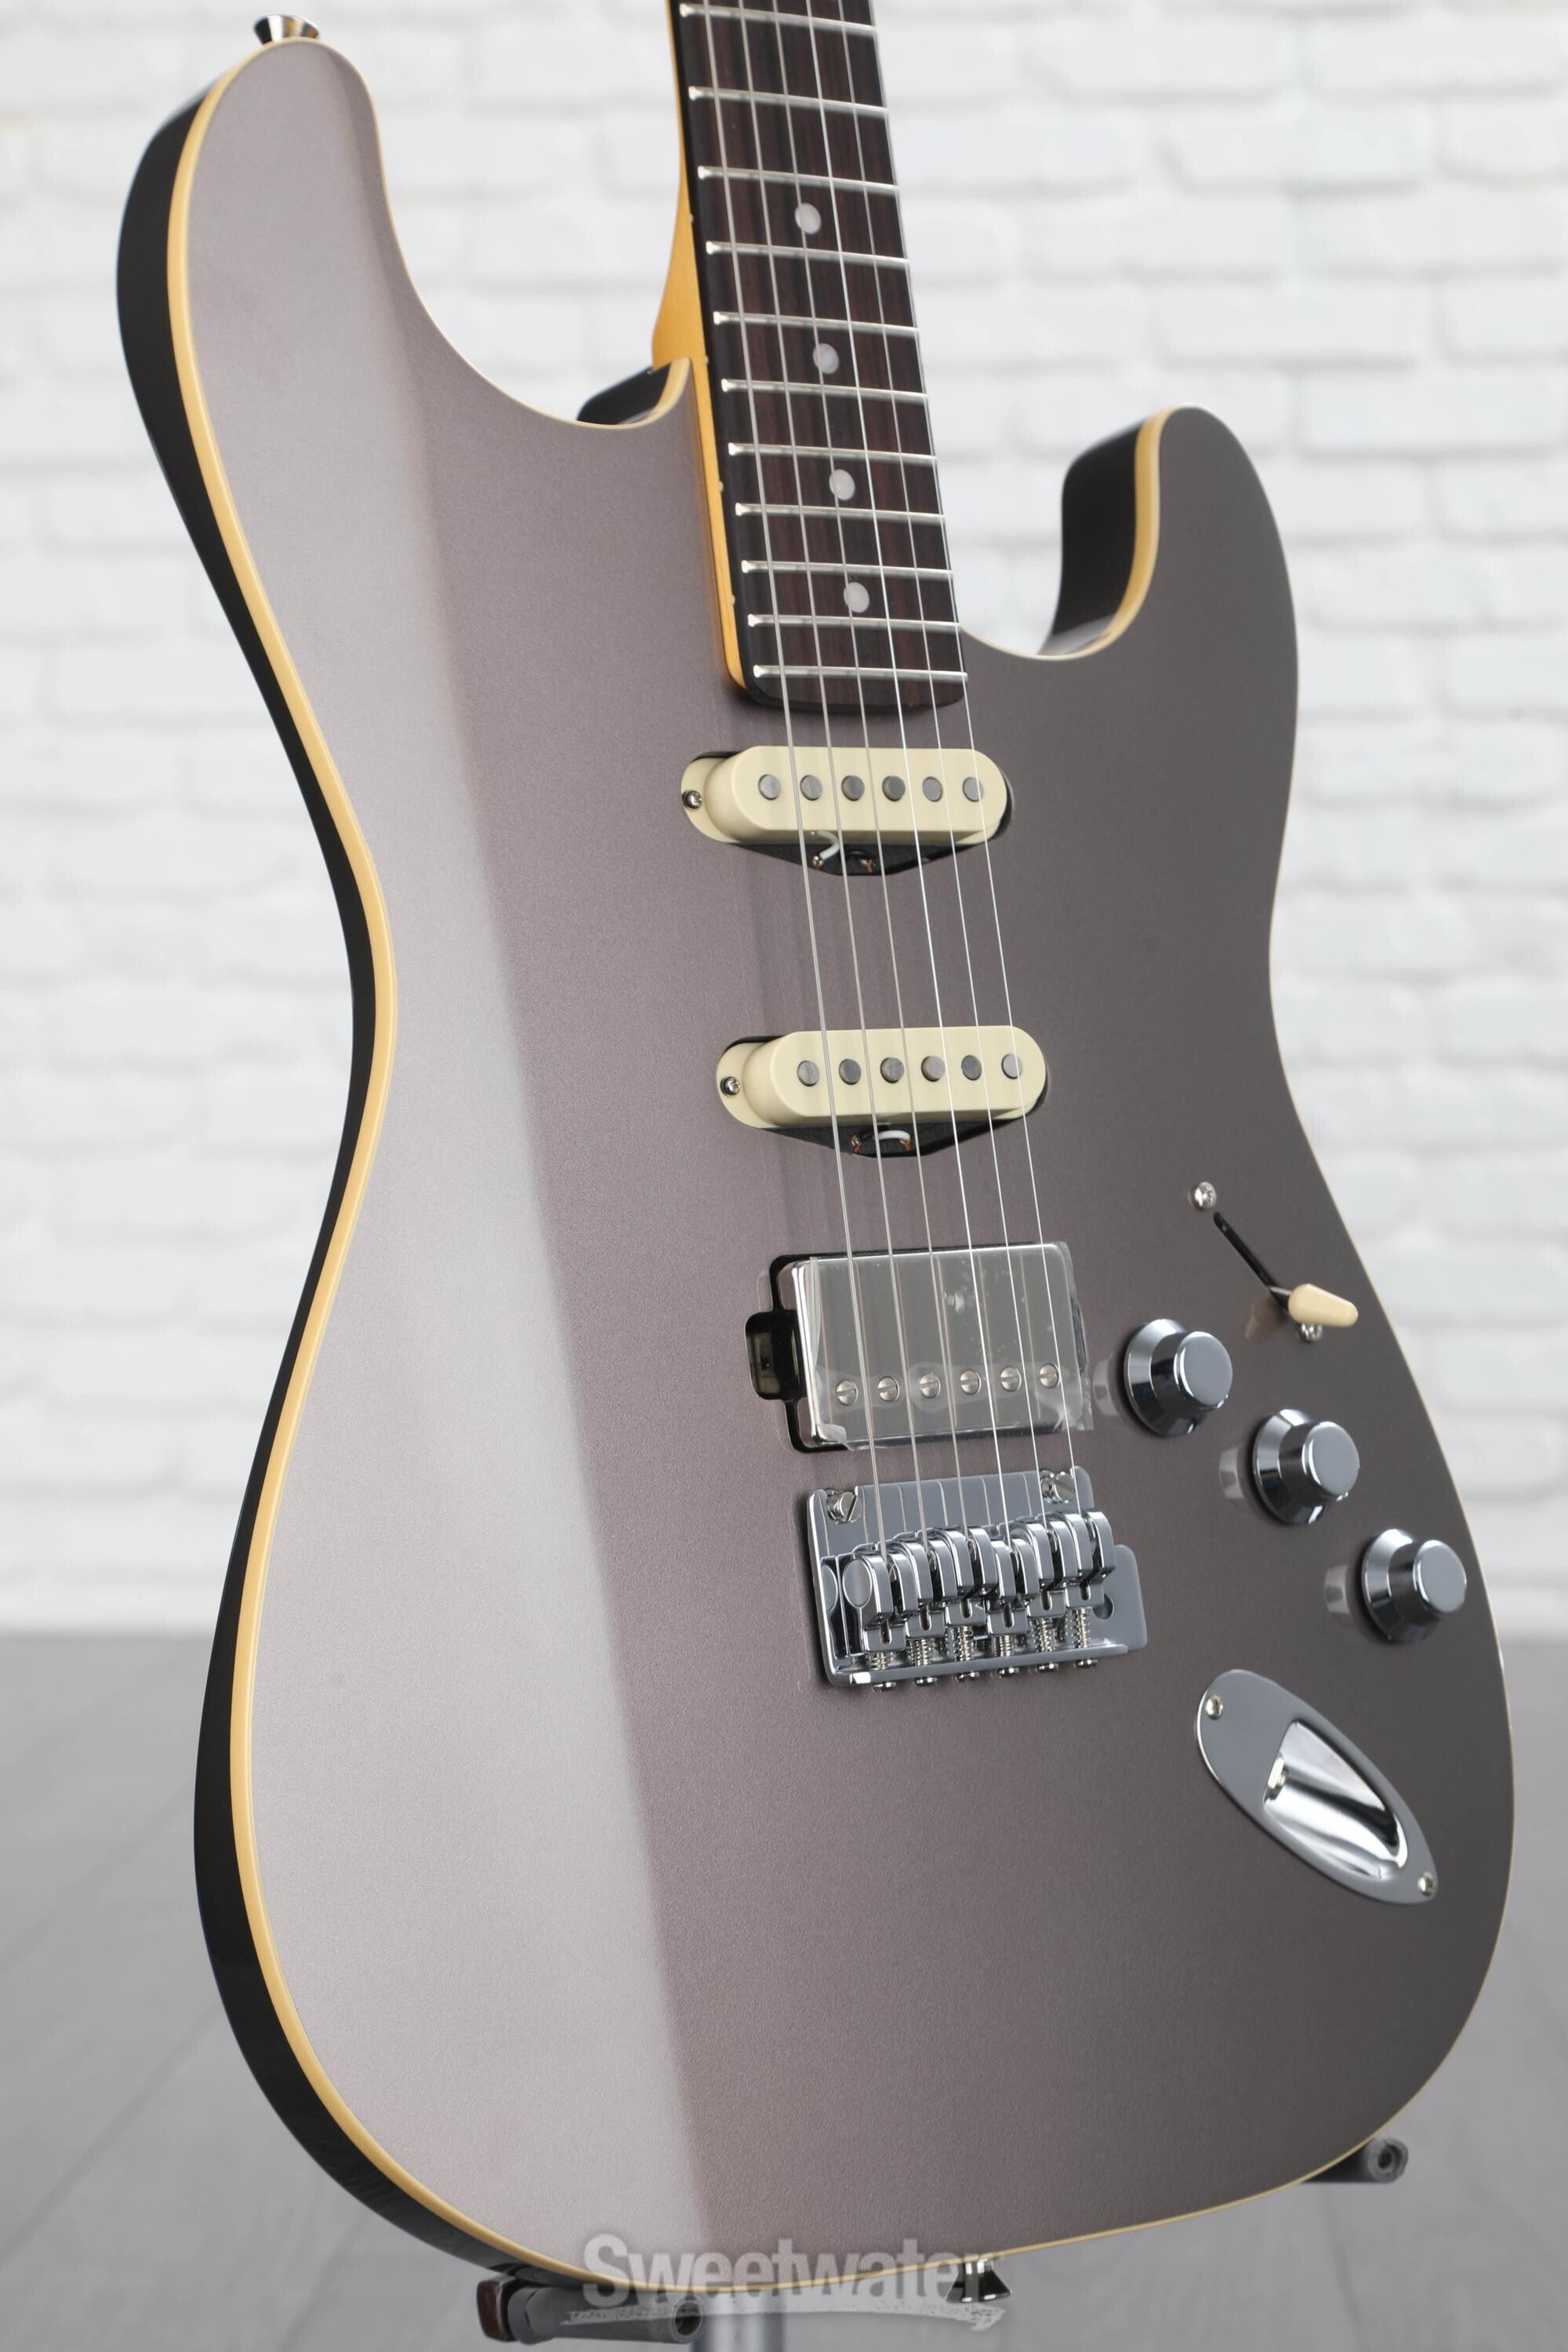 Fender Aerodyne Special Stratocaster HSS - Dolphin Gray Metallic